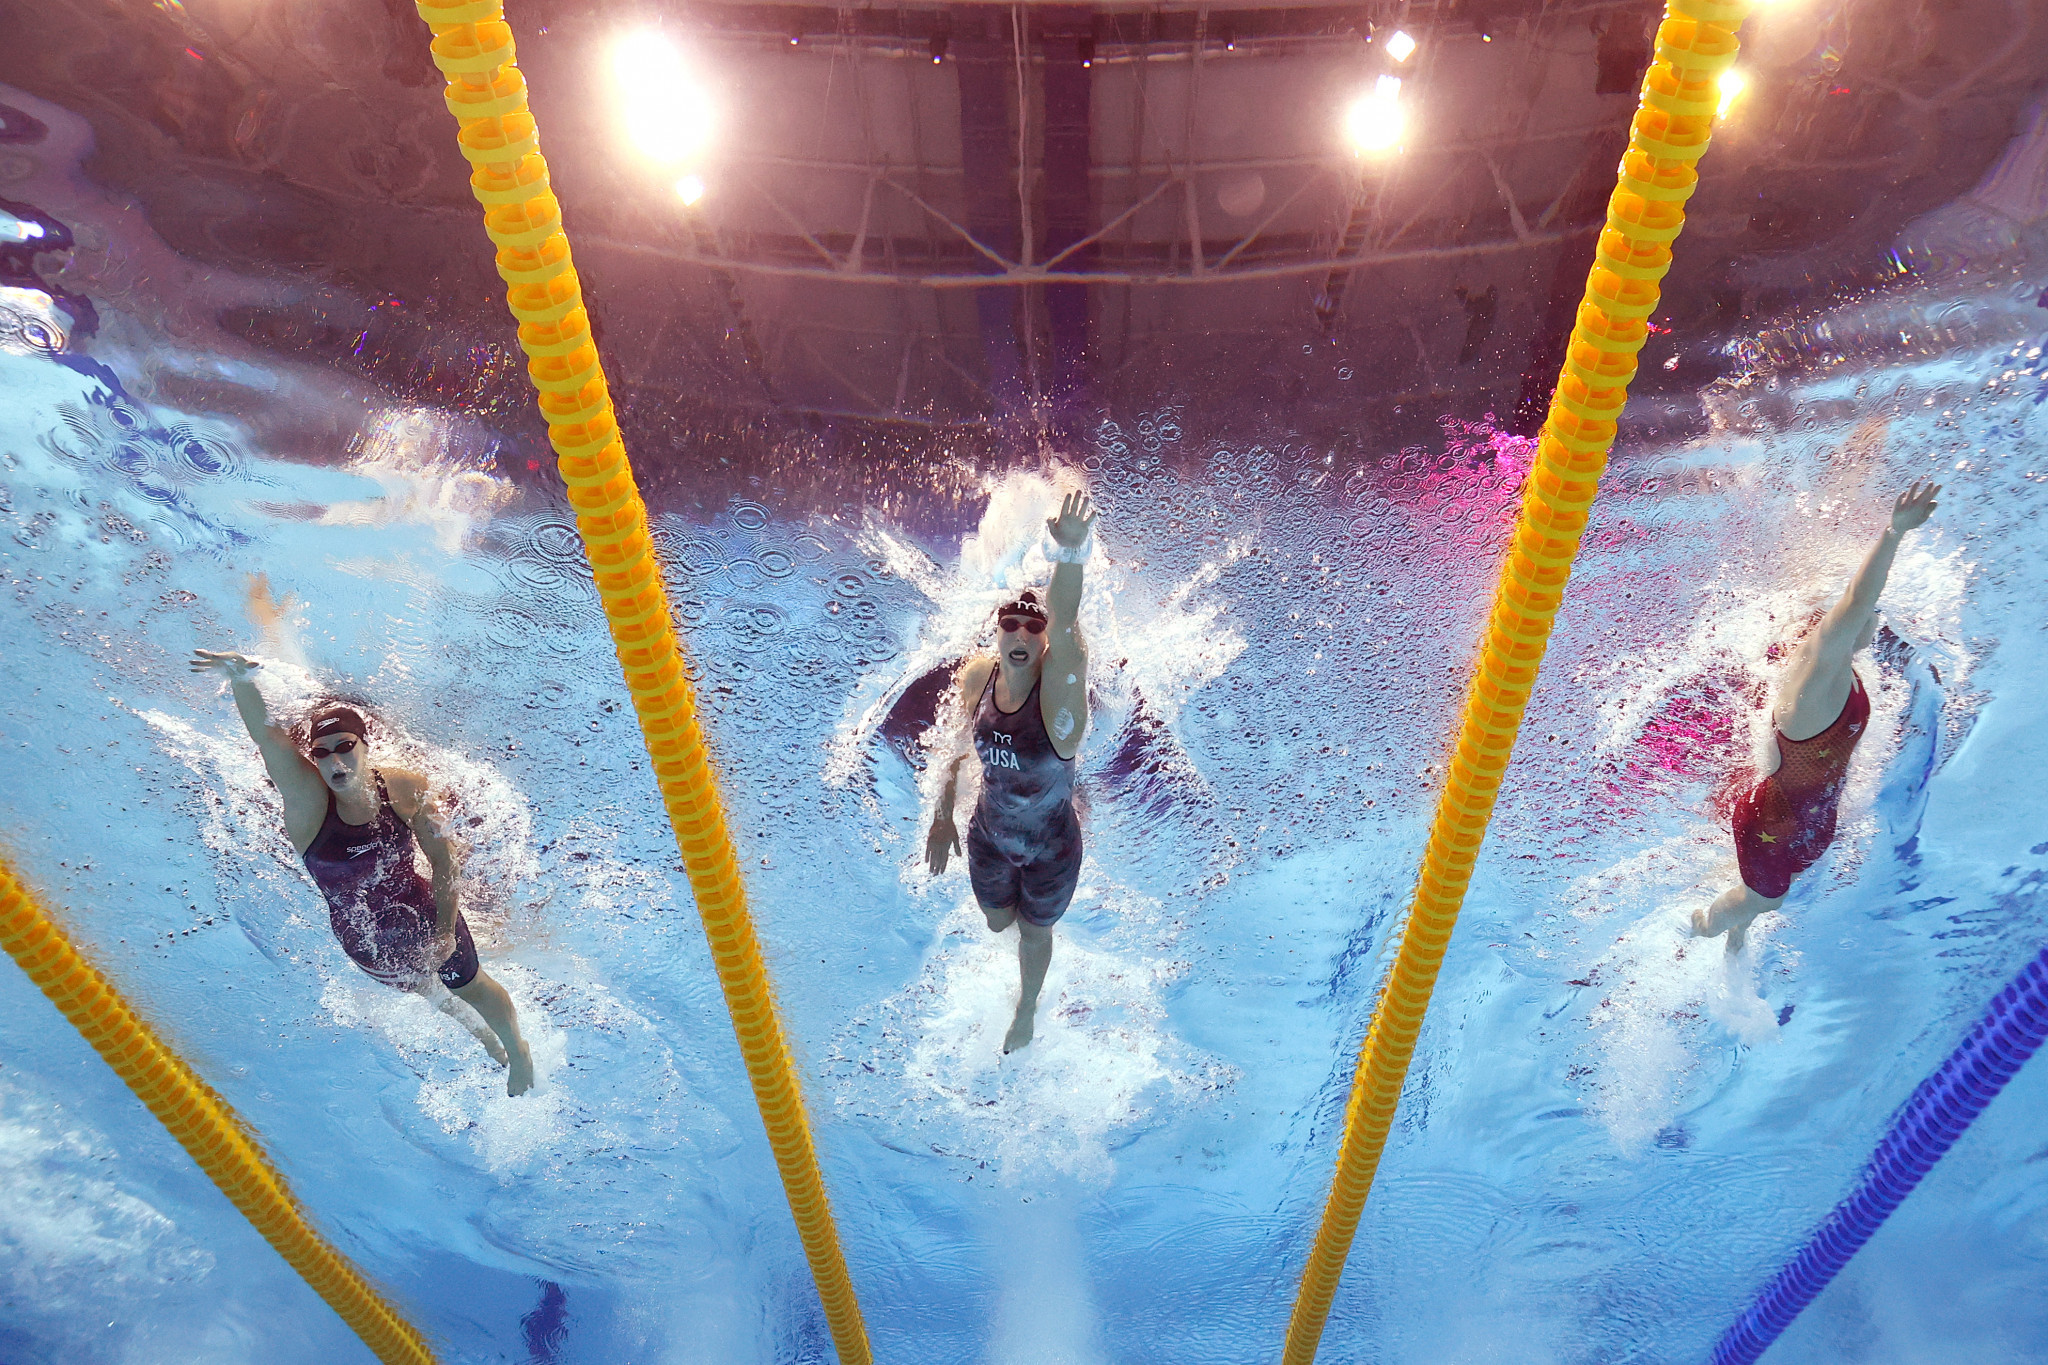 Russian swimming body calls for World Aquatics to give Paris 2024 qualifying criteria